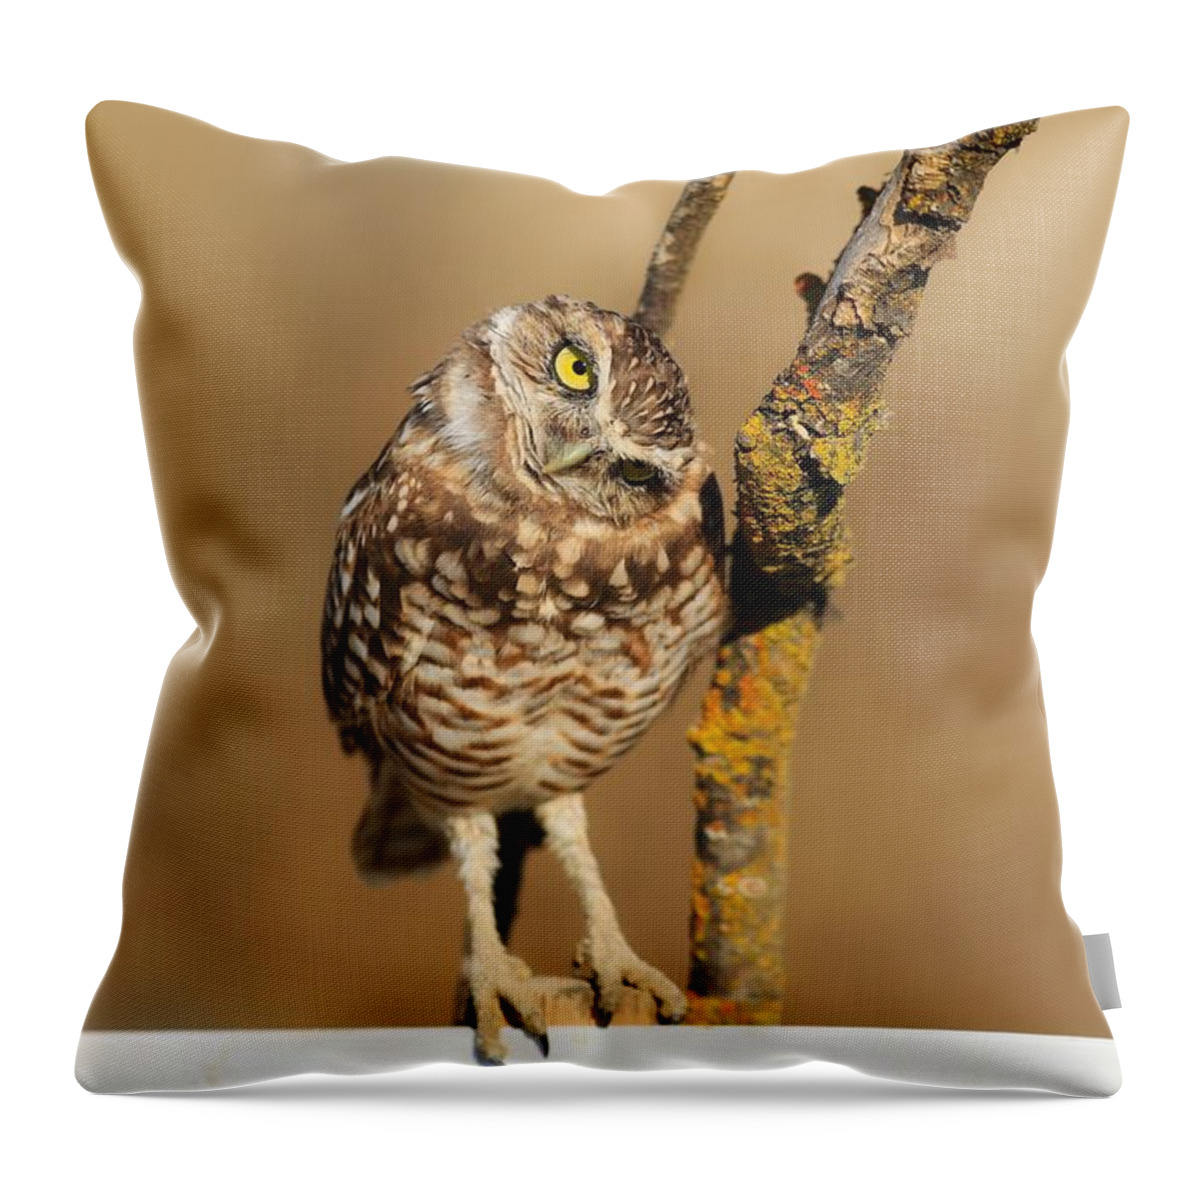 Cute Burrowing Owl Throw Pillow featuring the photograph Cute burrowing owl by Lynn Hopwood